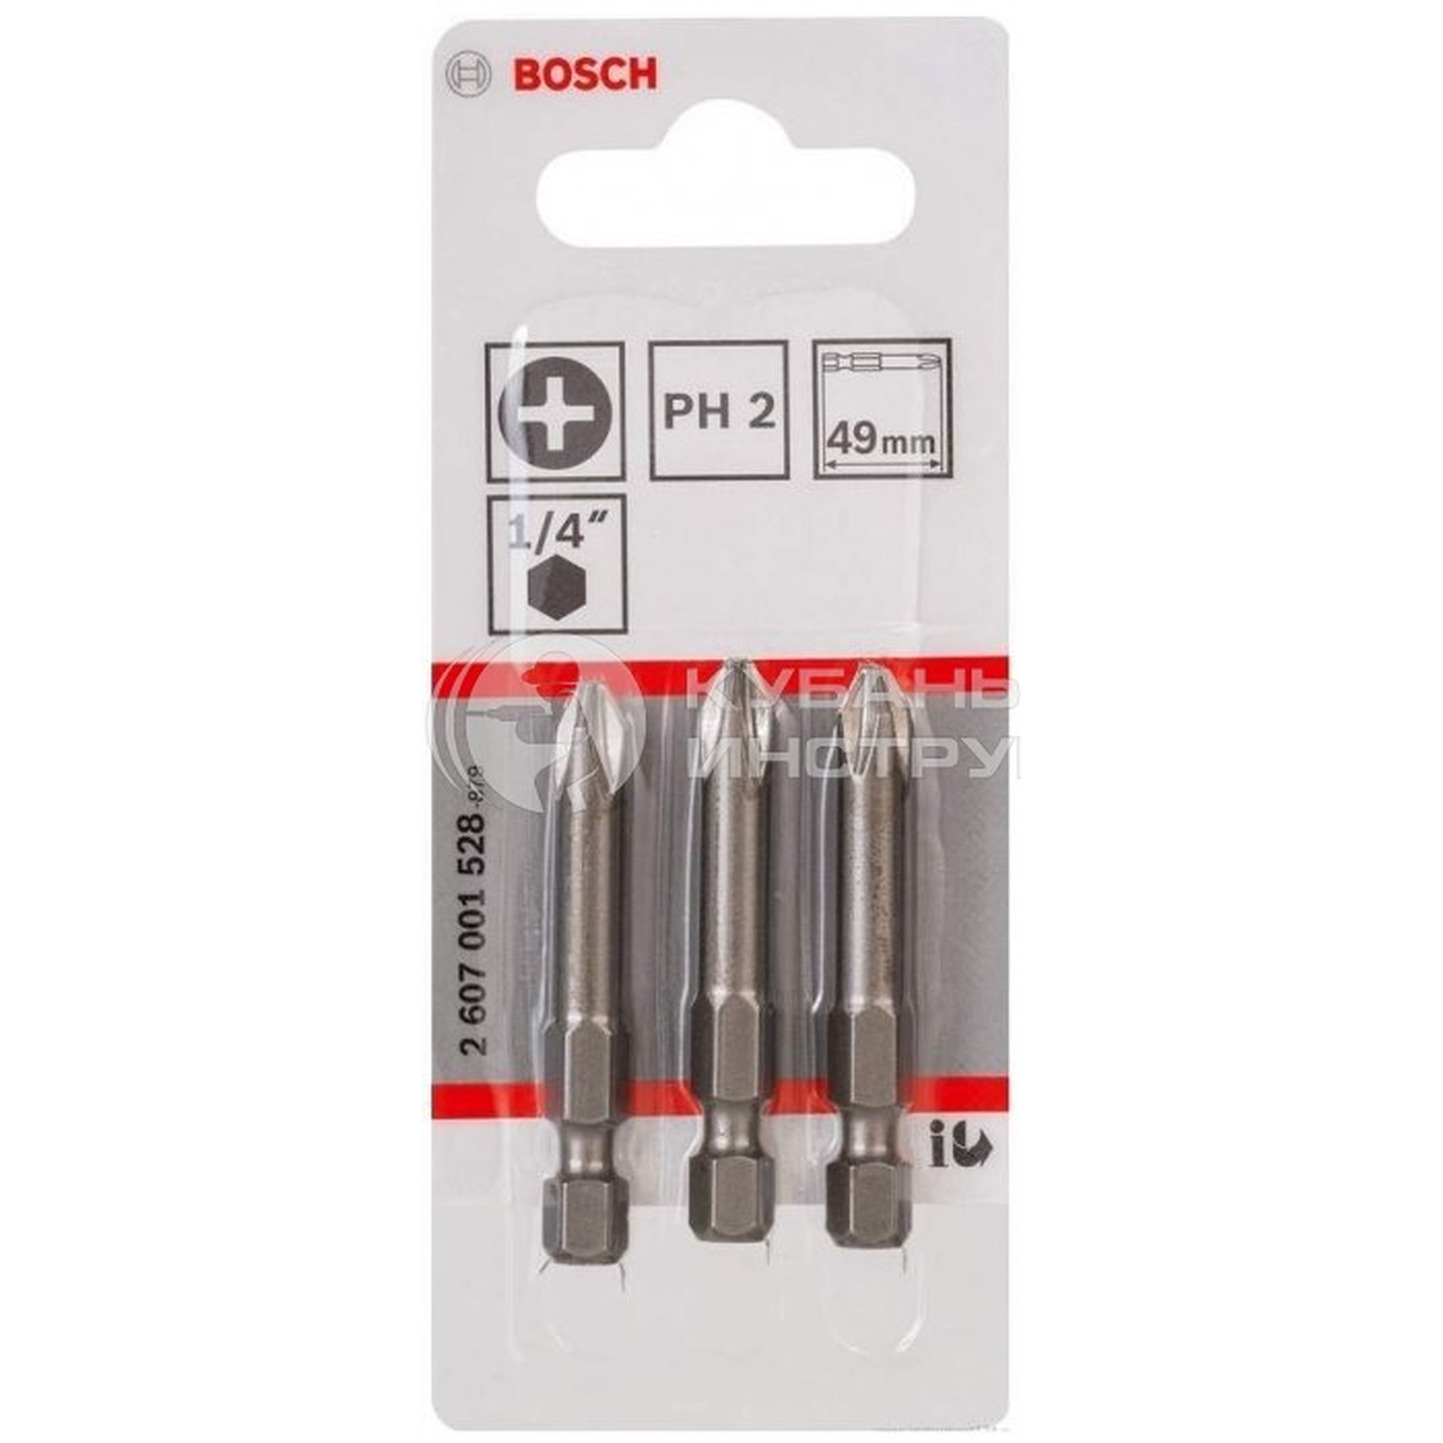 Бита Bosch 49мм PH2 XH 3шт 2607001528 бита ударная крестовая bosch extra hard 2607001528 ph2x49 мм 3 шт